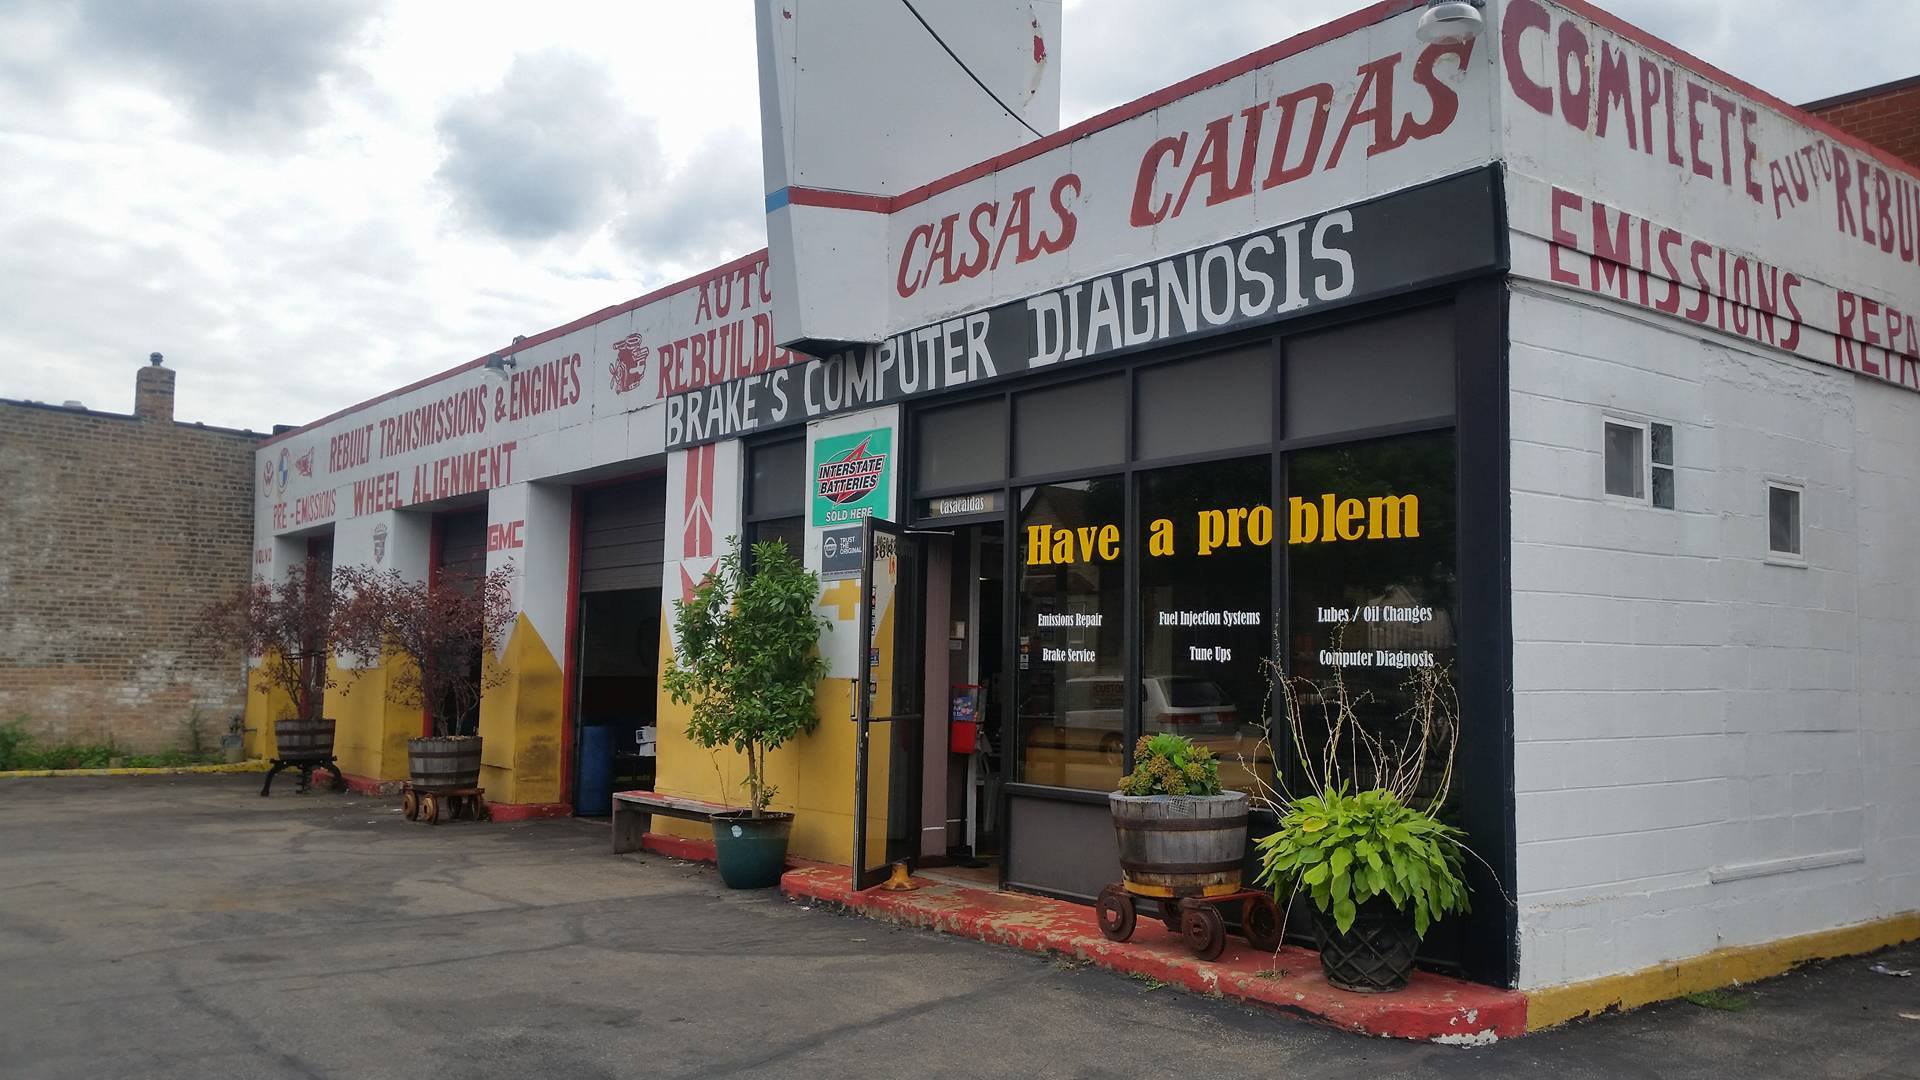 Casas Caidas Auto Repair